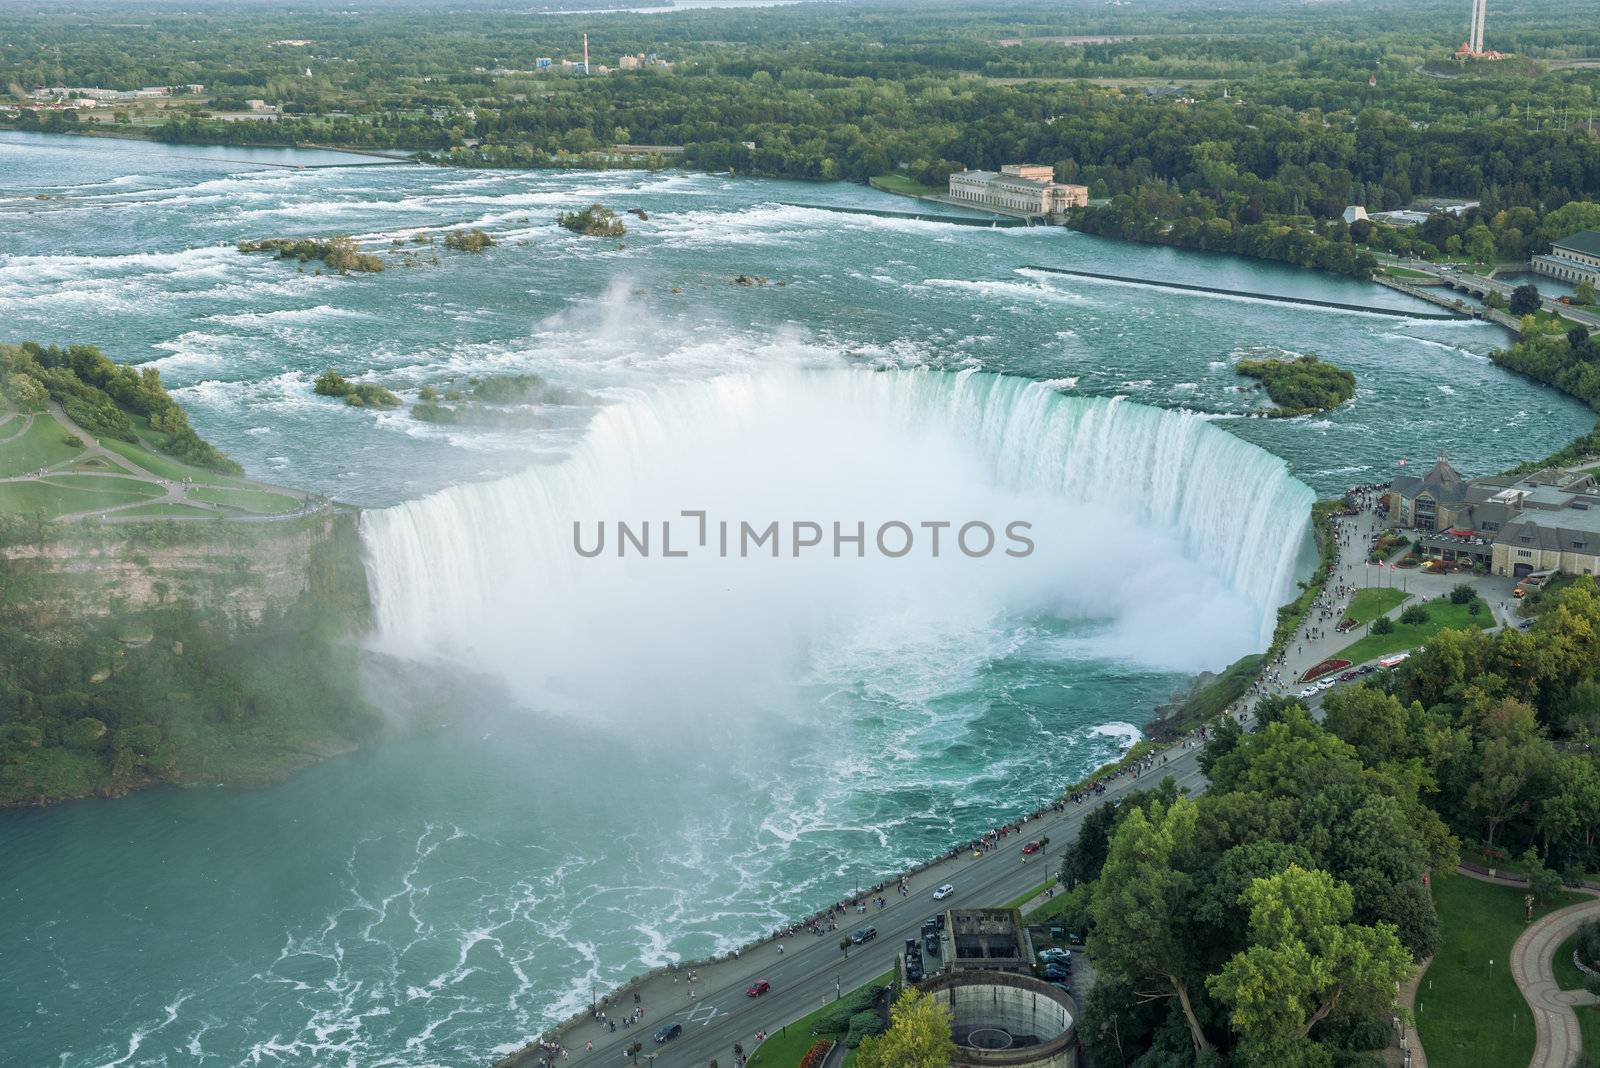 Niagara Falls aerial view from Skylon Tower platforms



